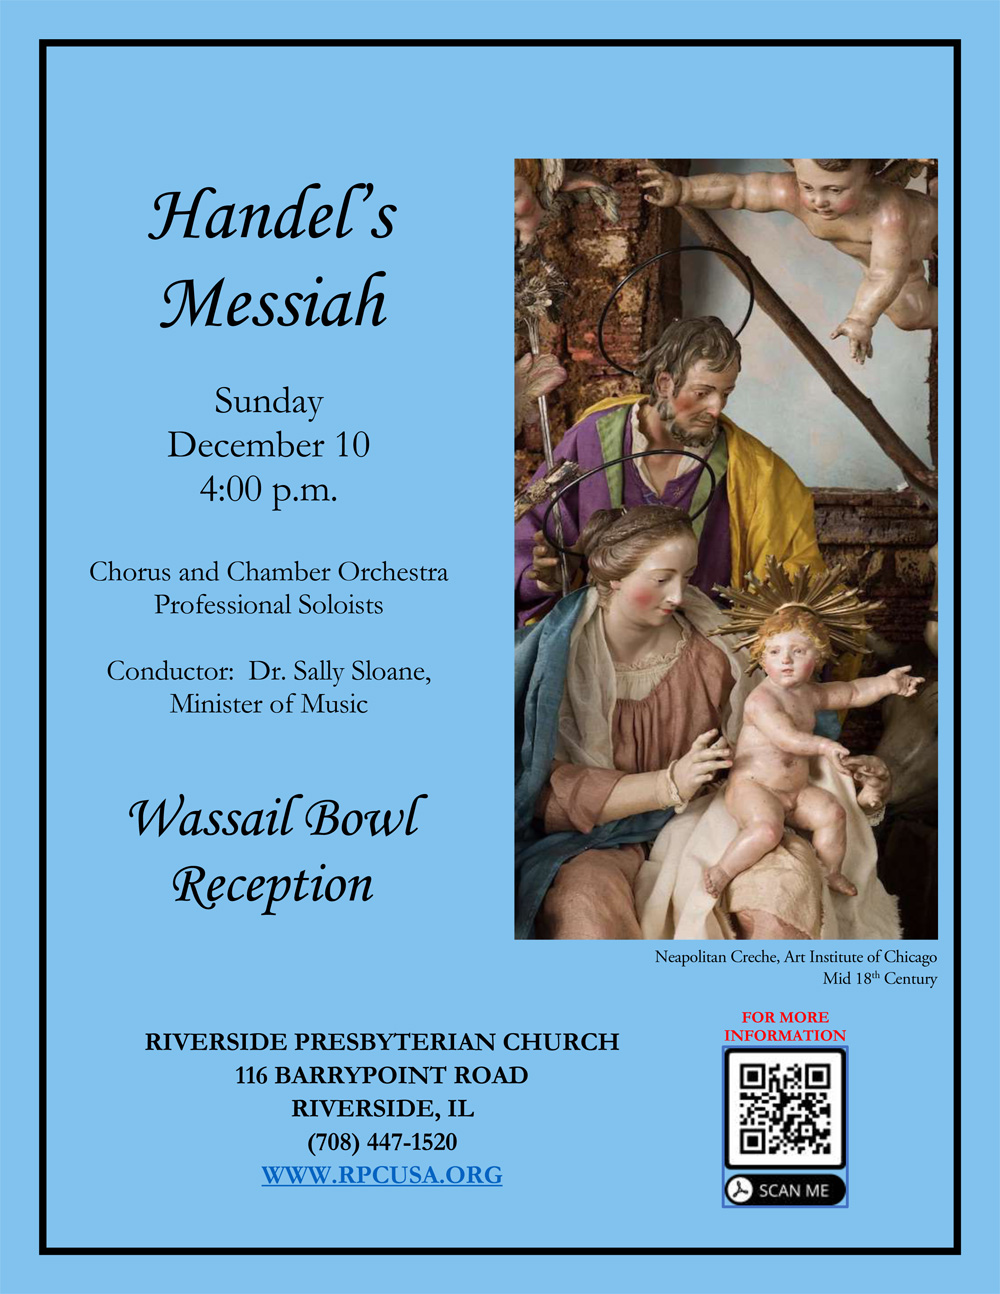 Handel's Messiah at Riverside Presbyterian Church